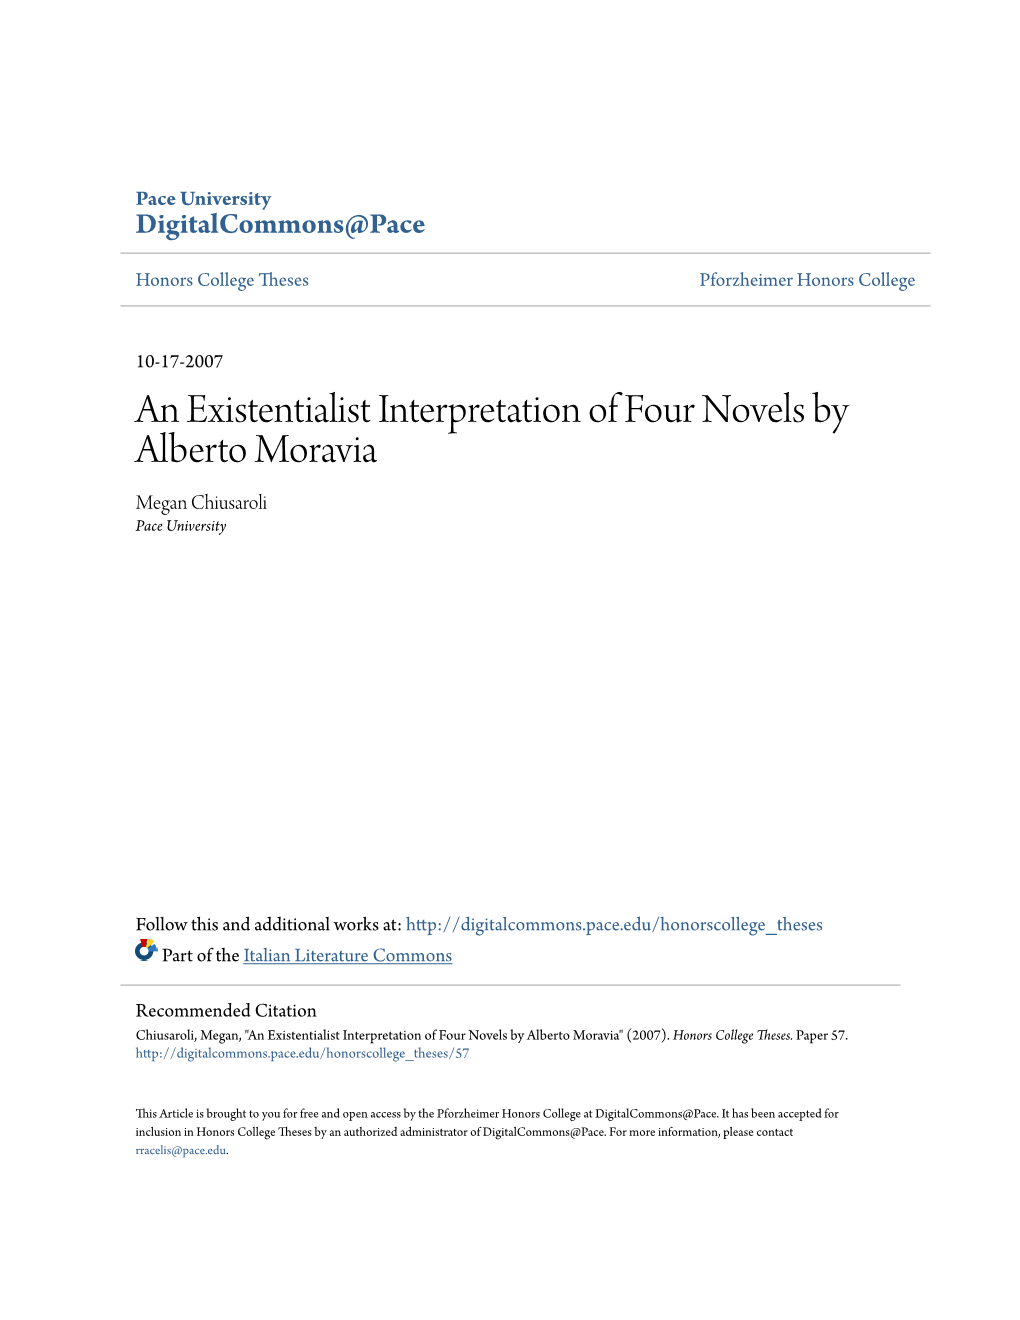 An Existentialist Interpretation of Four Novels by Alberto Moravia Megan Chiusaroli Pace University